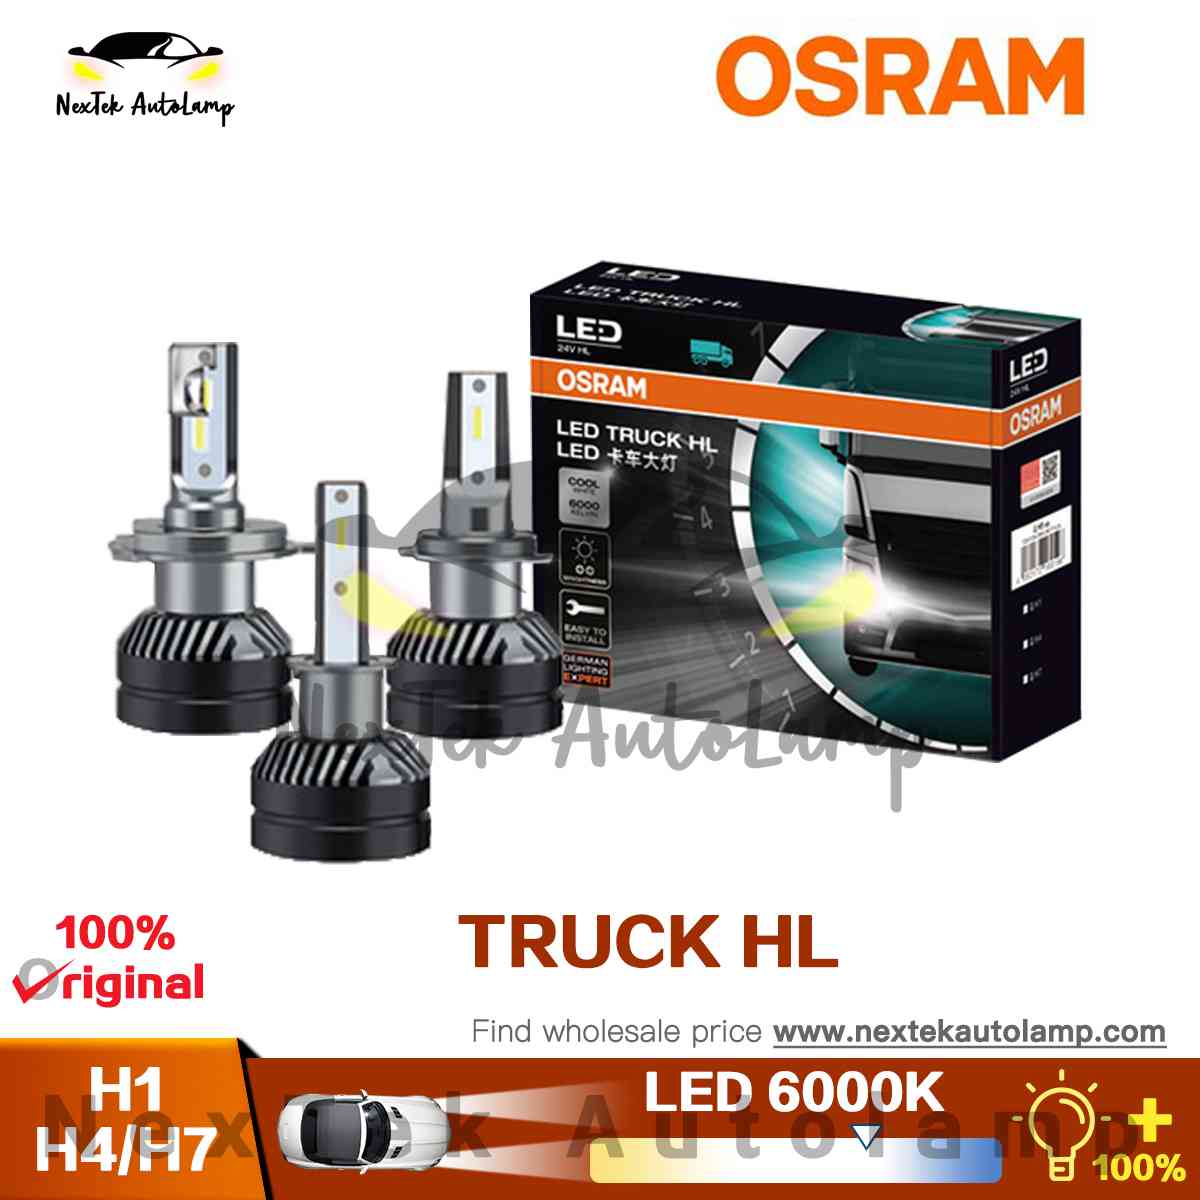 OSRAM LED TRUCK HL H1 H4 H7 24V 28W 6000K +100%Super Bright Headlight White  Car Bulb